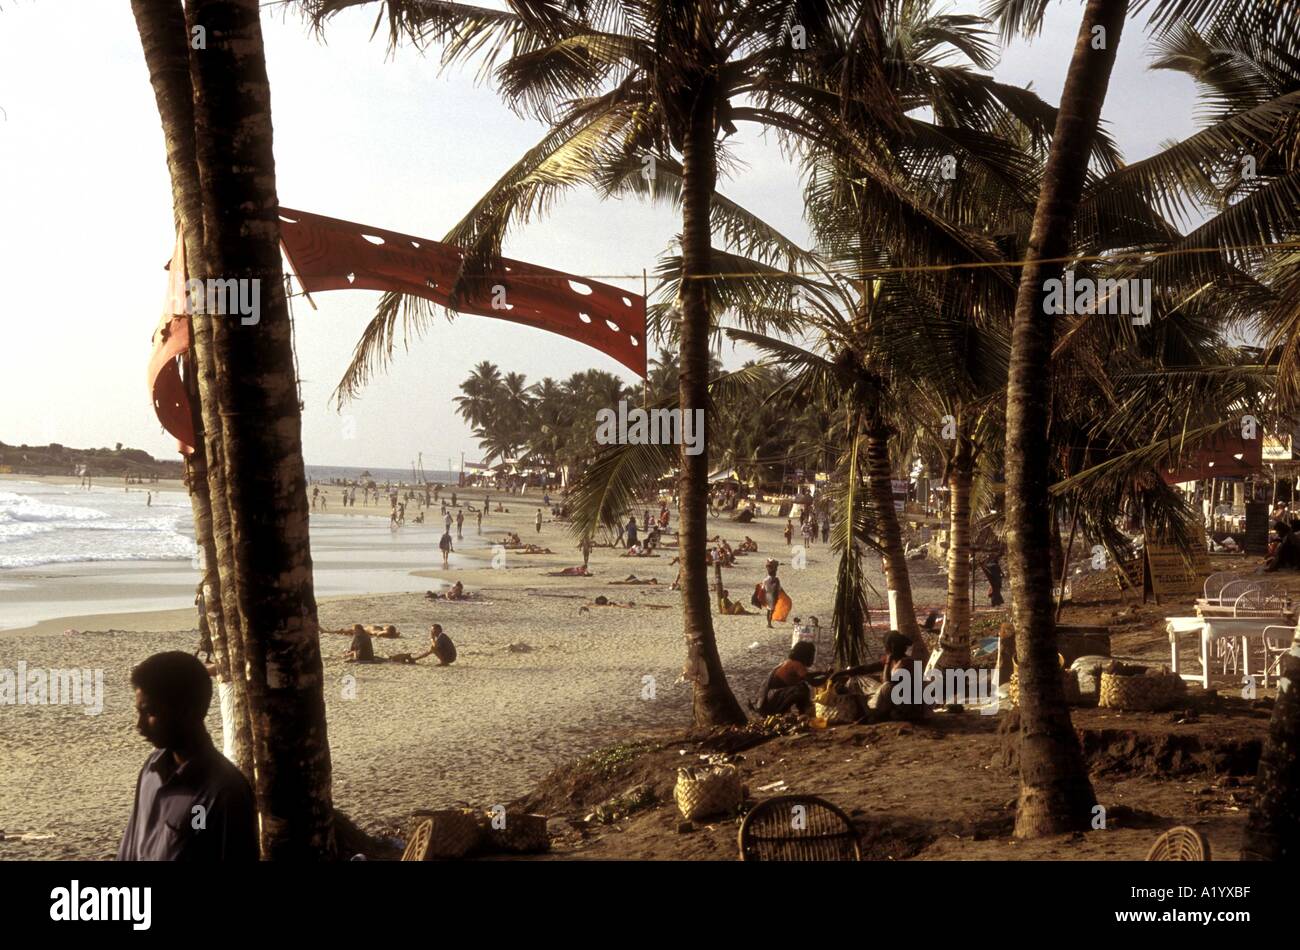 John Sturrock Network Photographers Image Ref JSA 10110377 psd Kerala India A beach at Kovalam Stock Photo